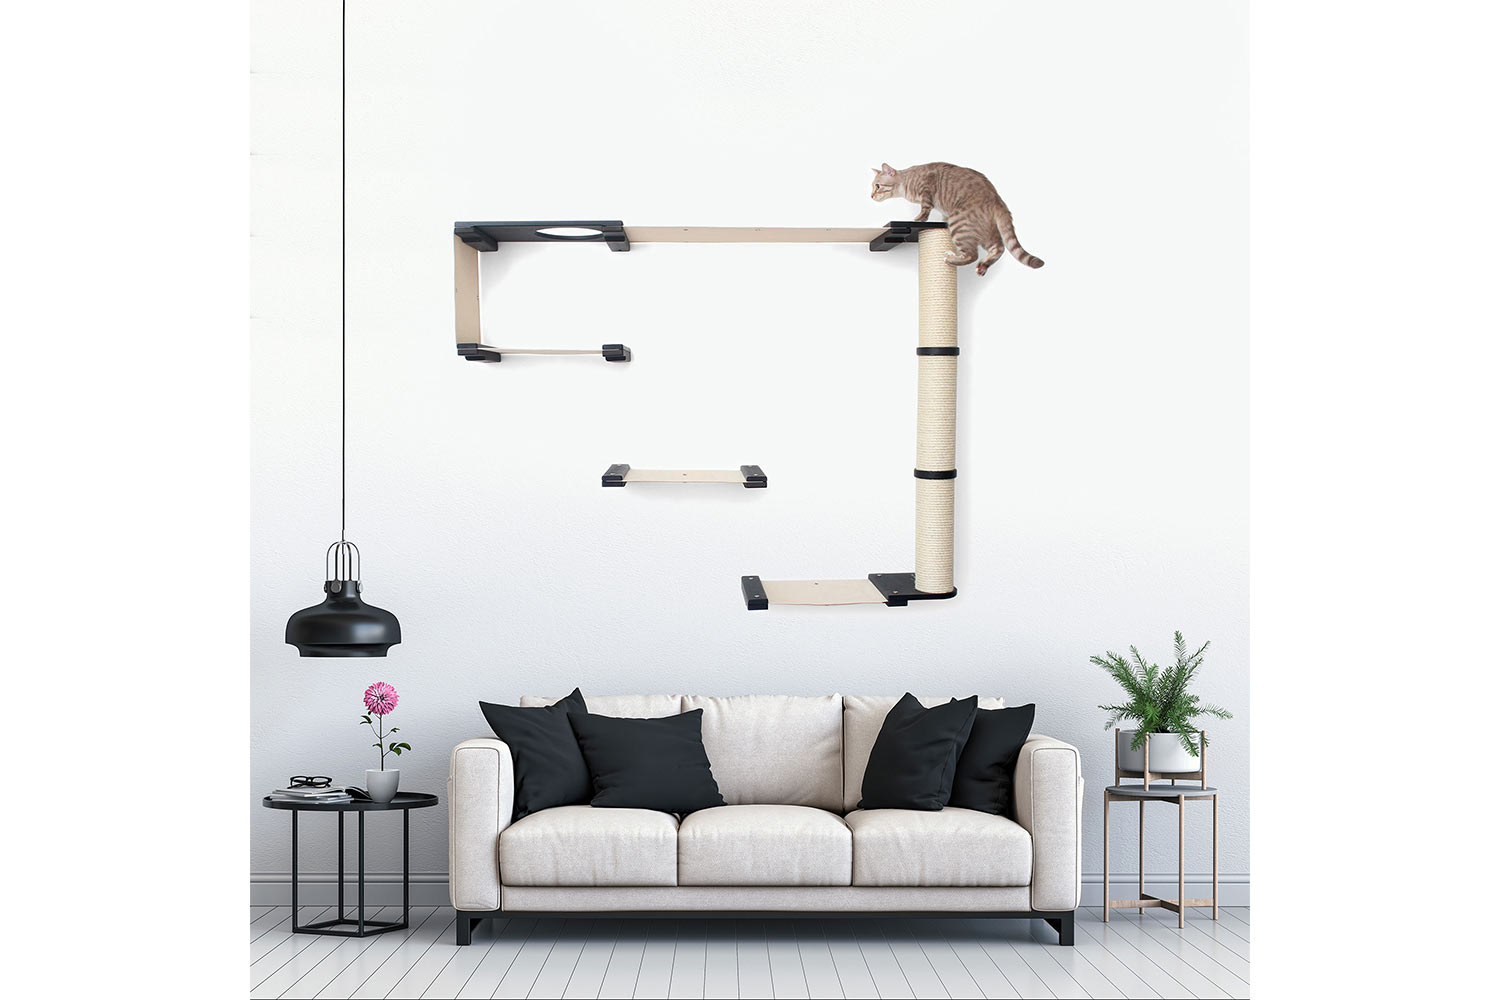 The Climb Cat Condo in a living room